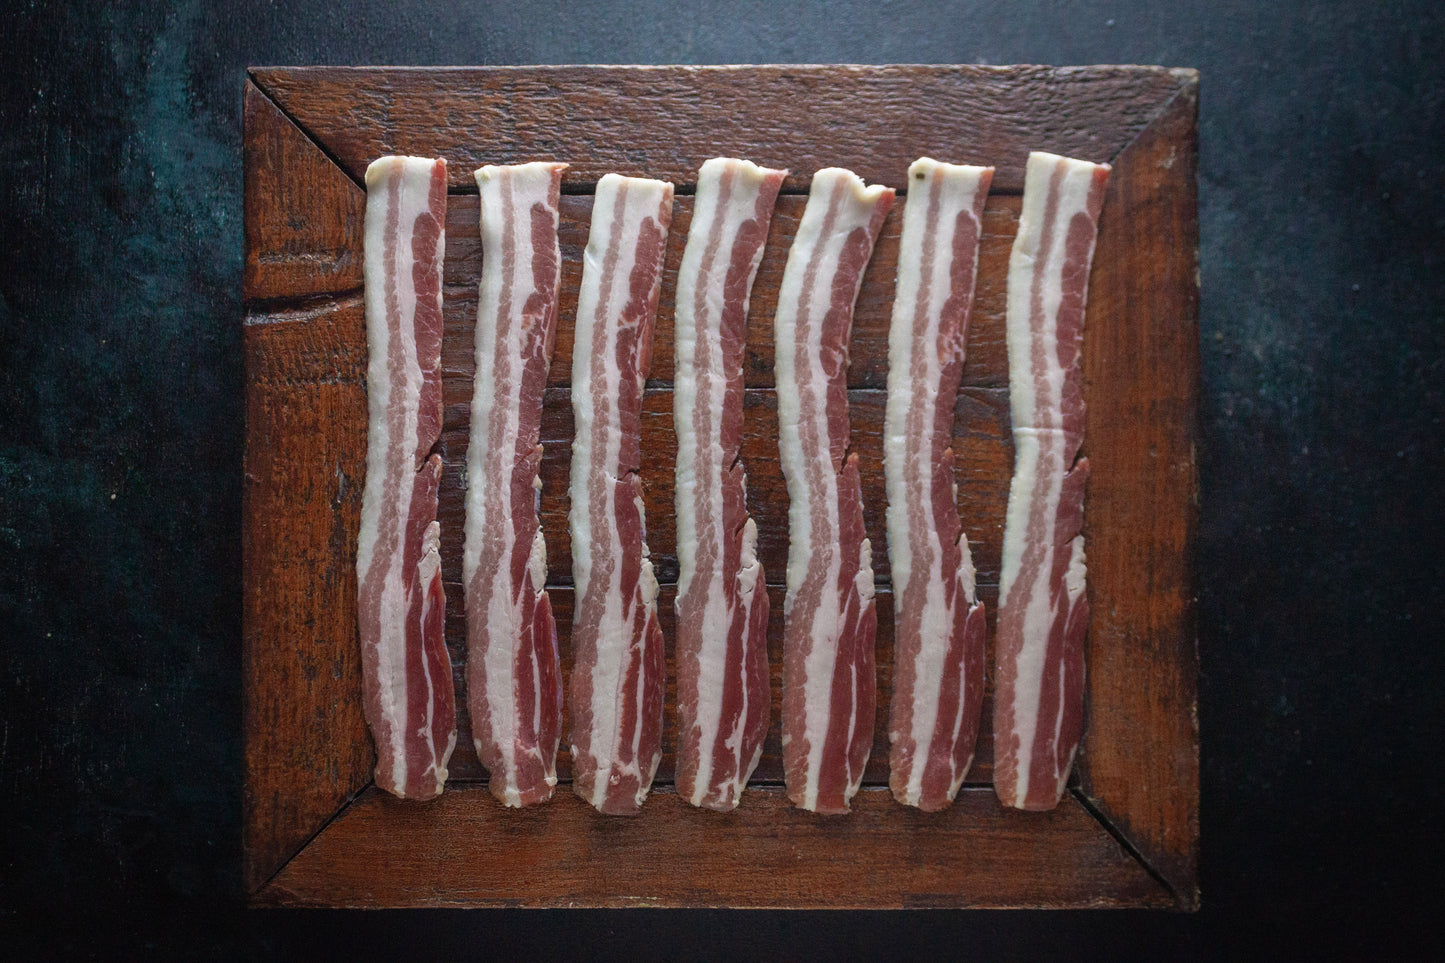 Aged Streaky Bacon Restaurant Packs